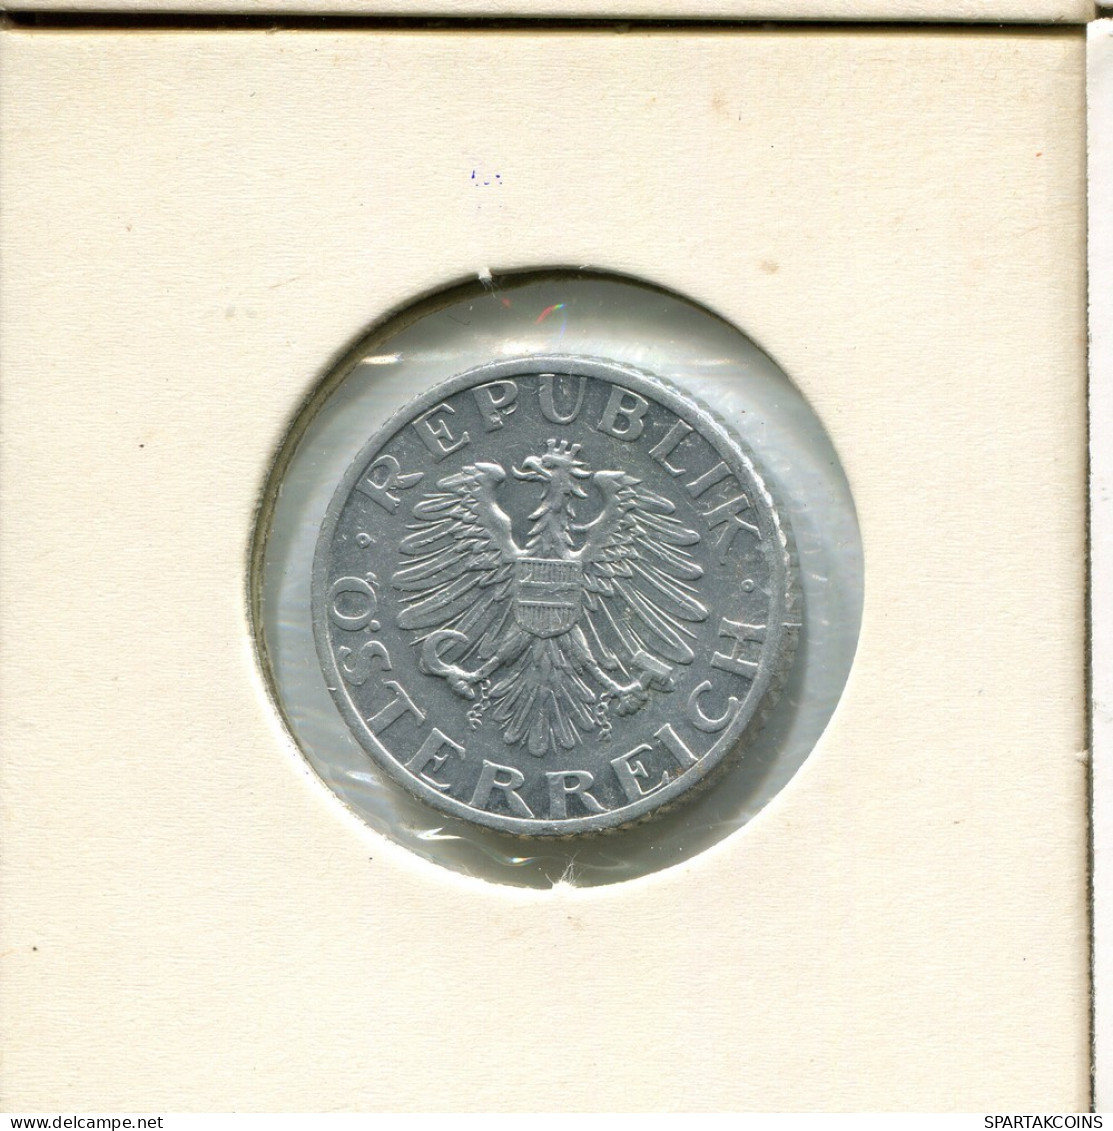 50 GROSCHEN 1952 AUSTRIA Coin #AR769.U.A - Autriche